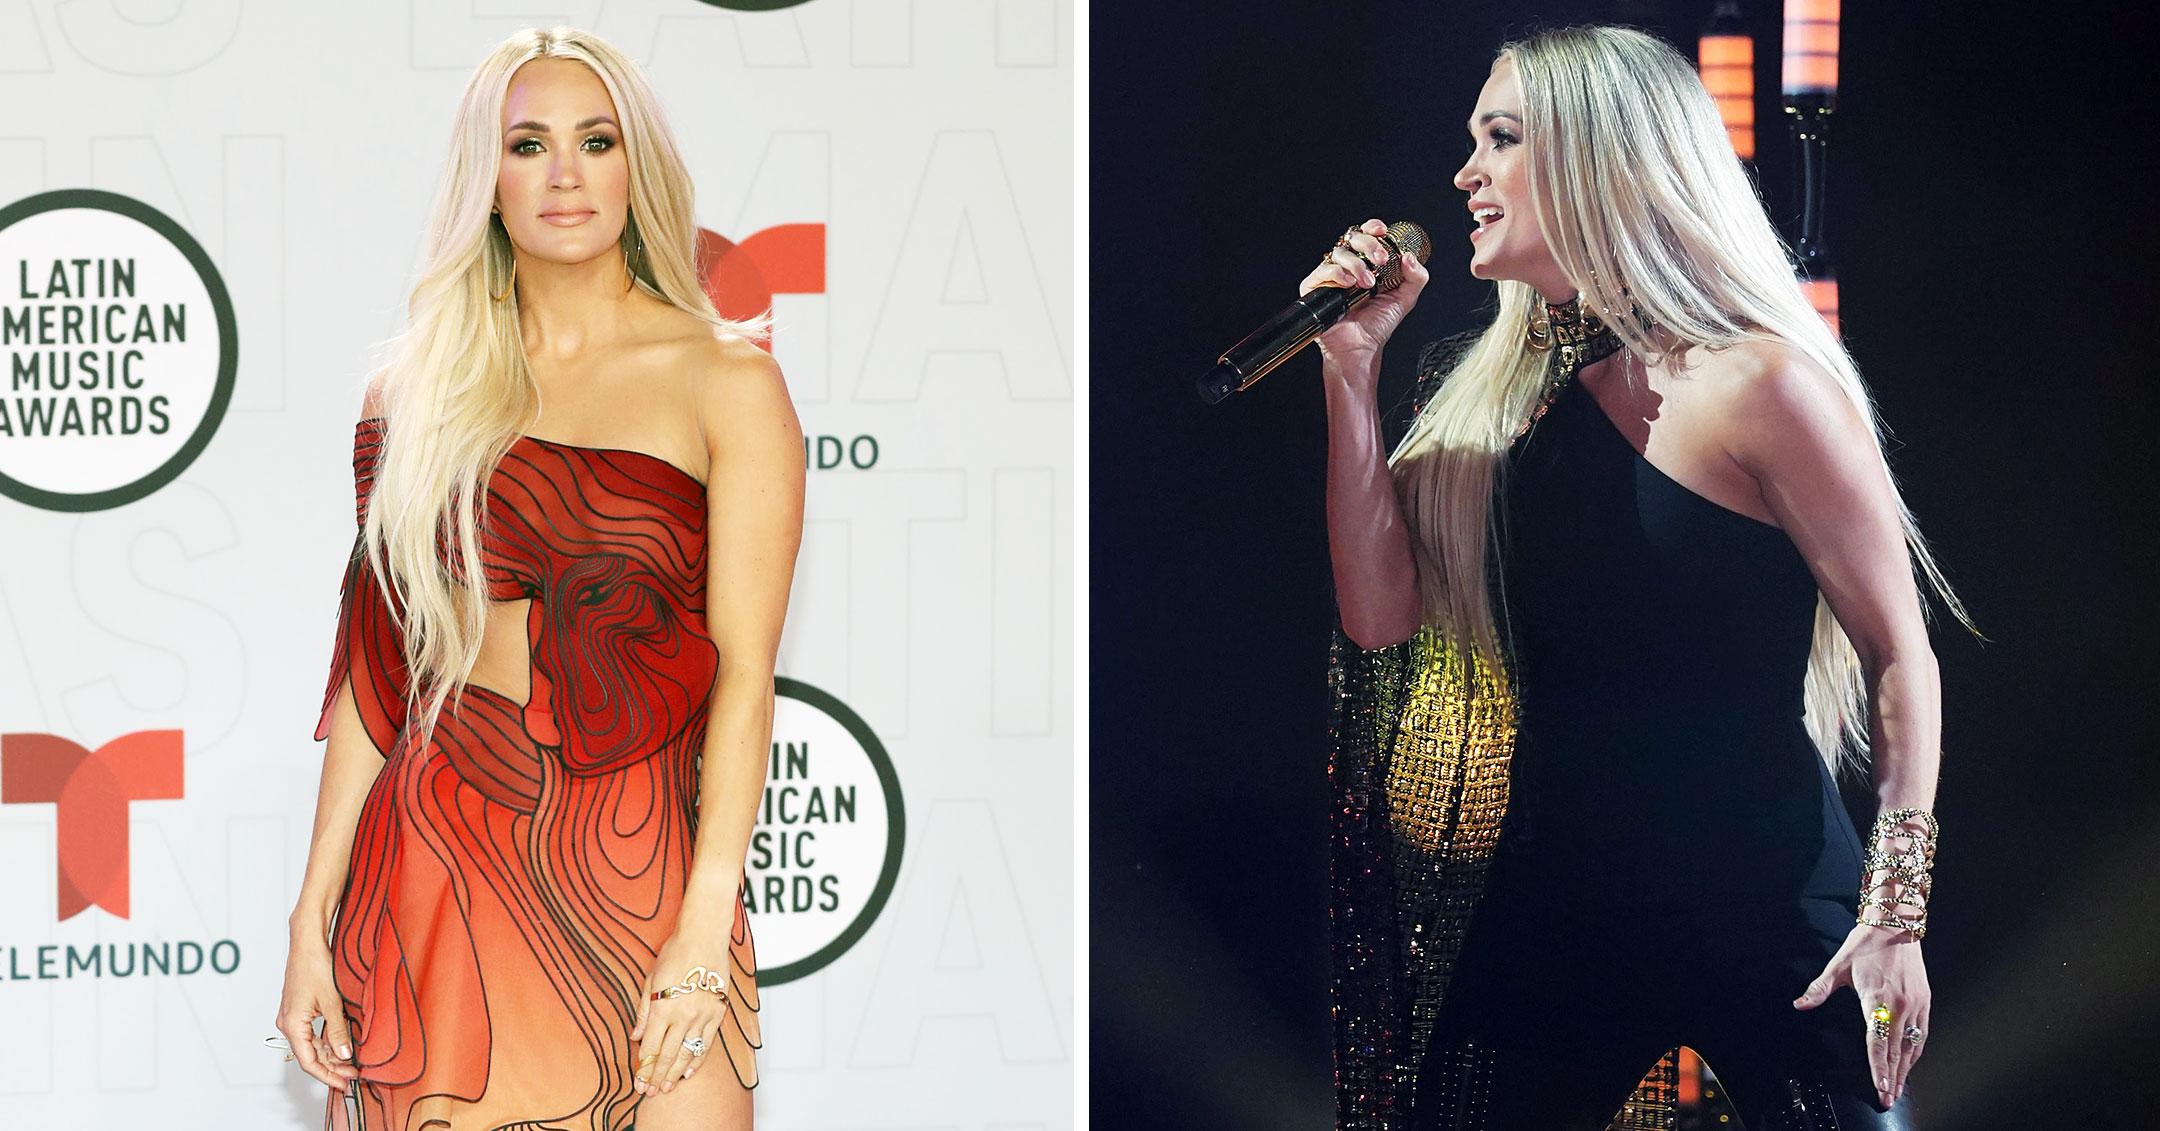 Carrie Underwood Wears Fiery Dress To Latin Music Awards: Photos